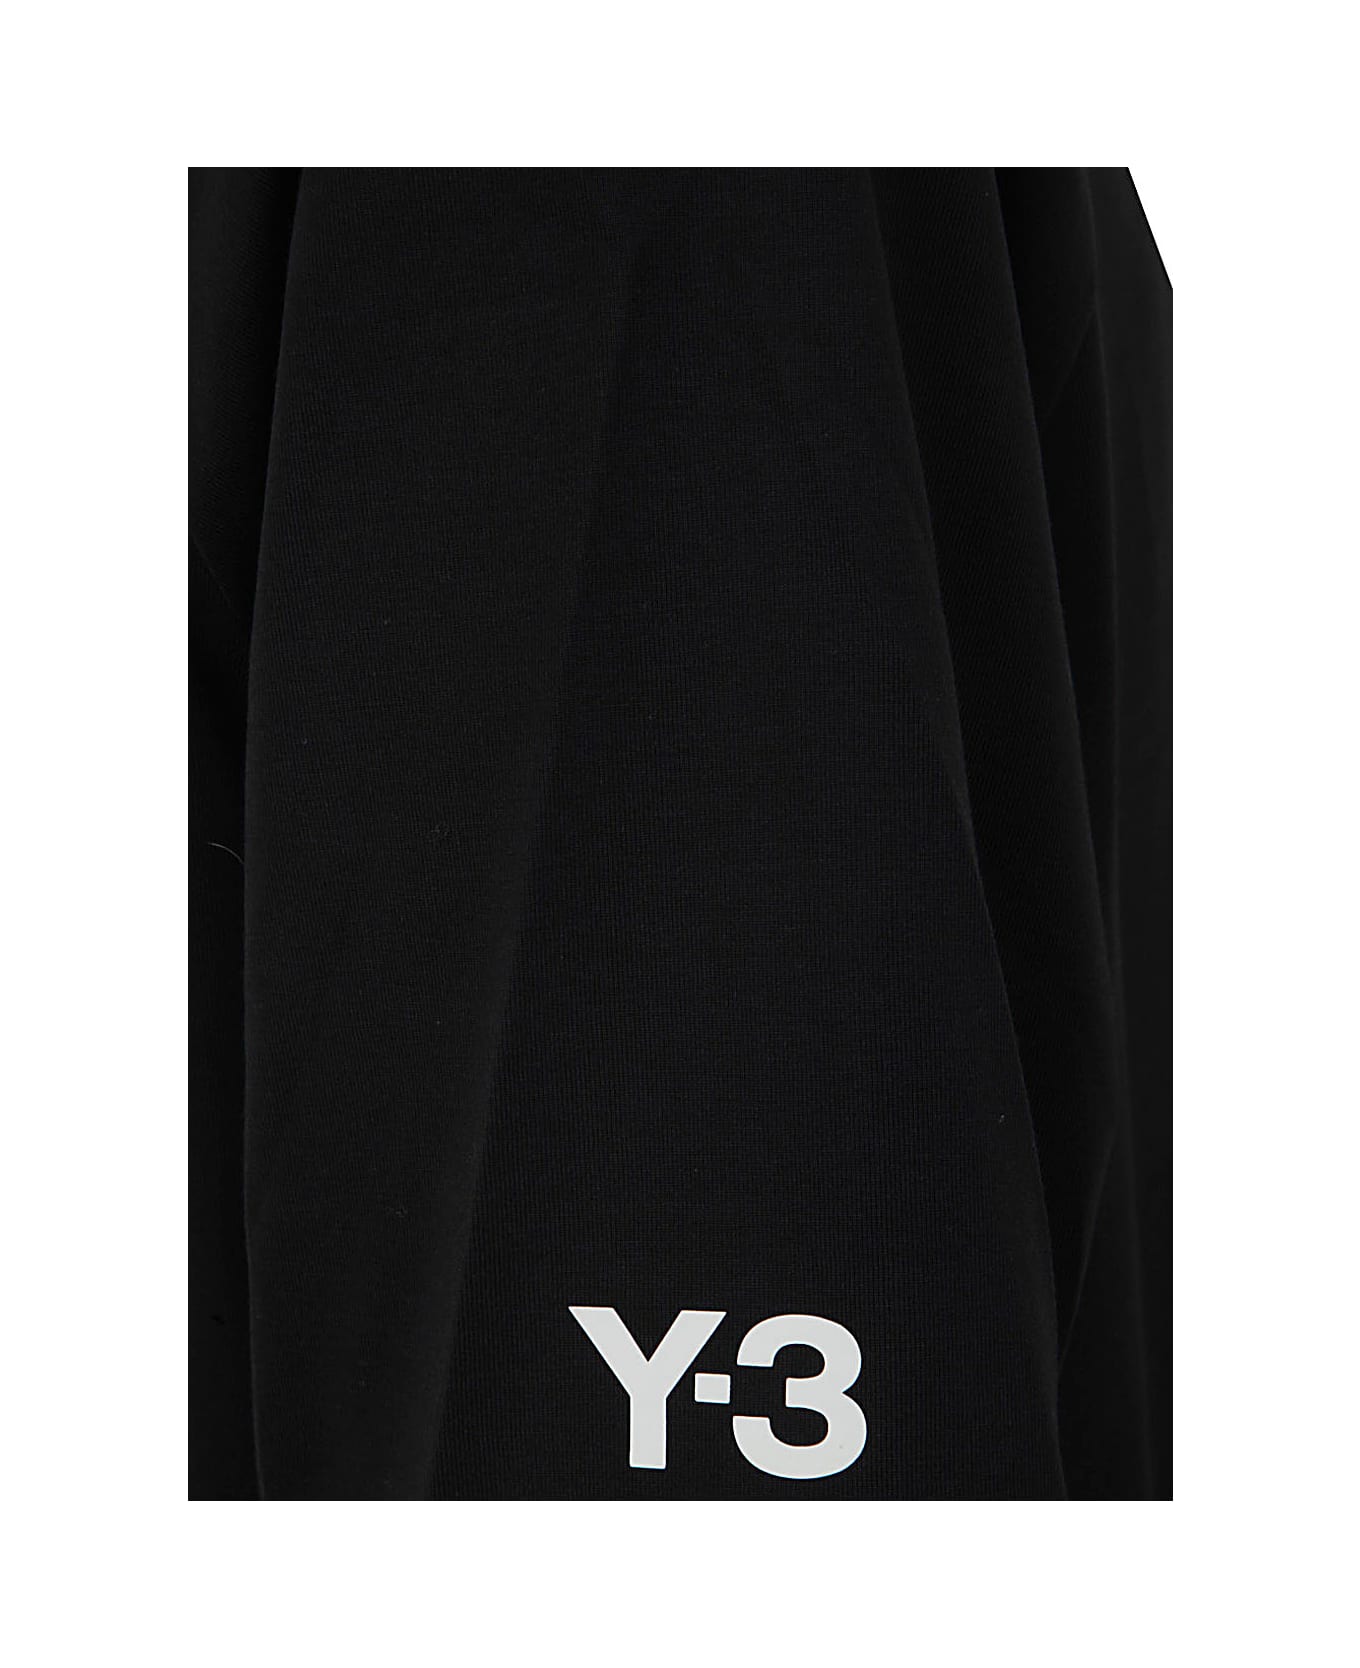 Y-3 3s Short Sleeve Tee - Black Off White